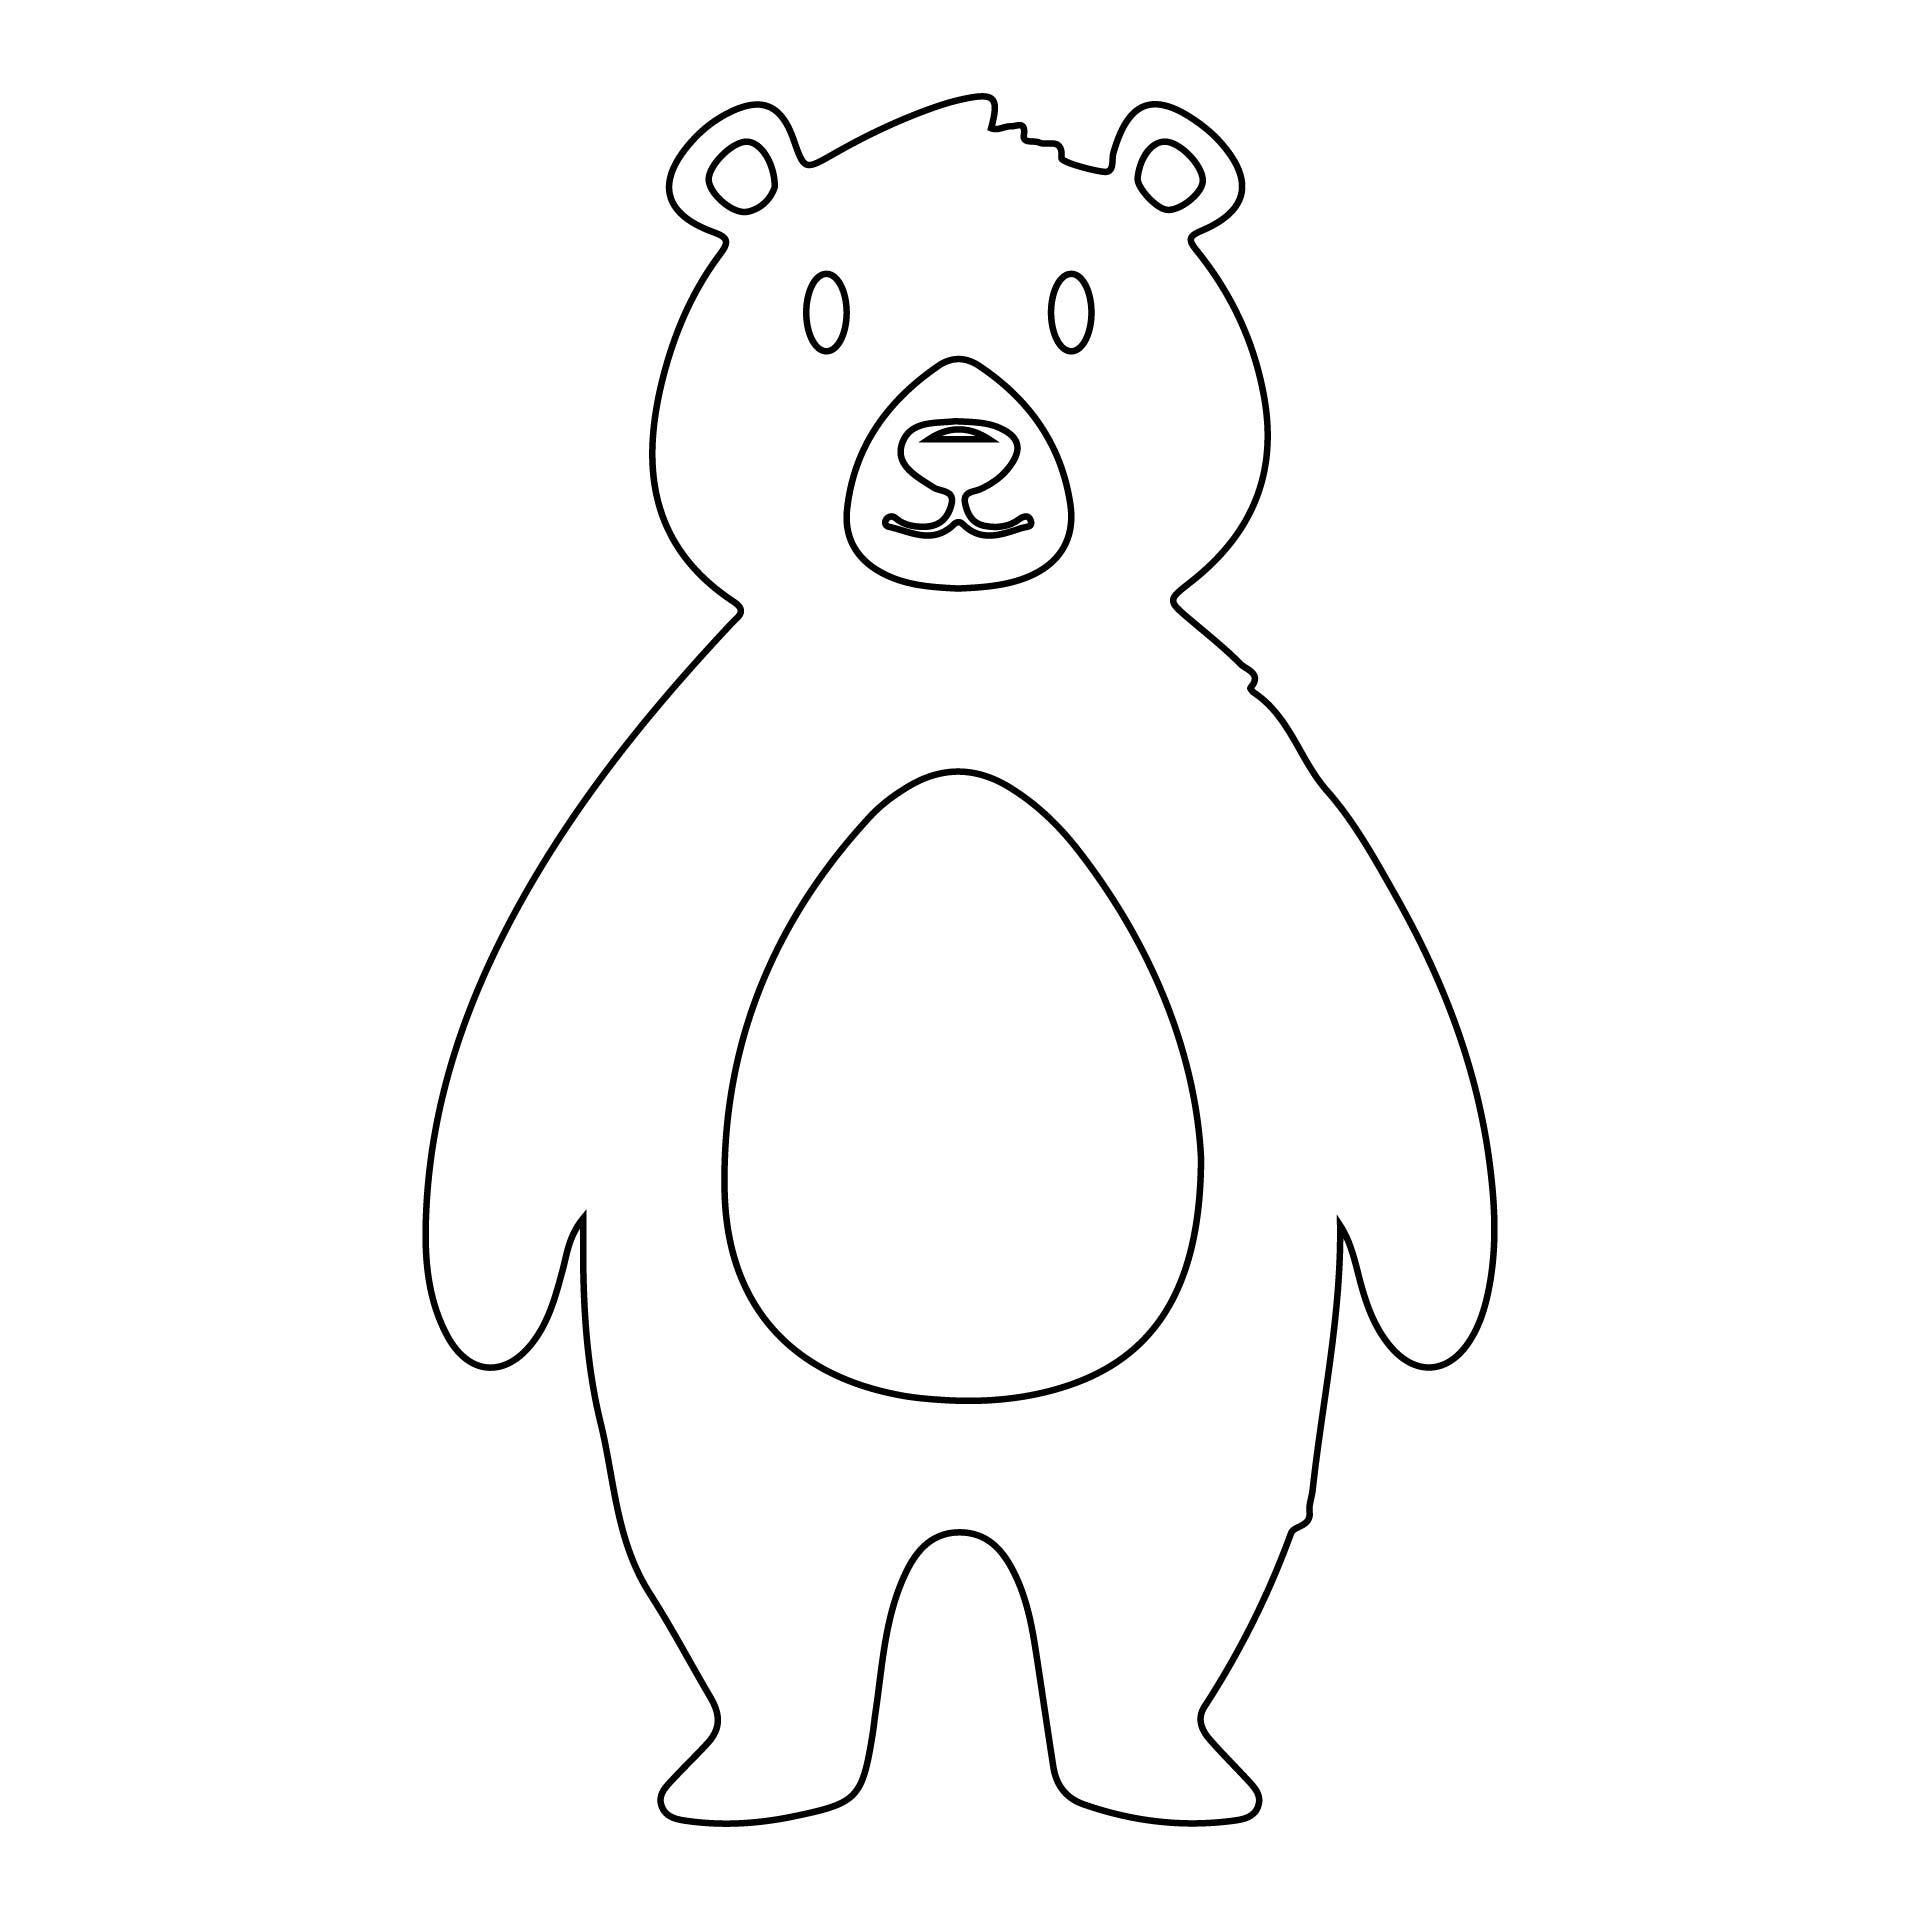 Printable Teddy Bear Stencil Template